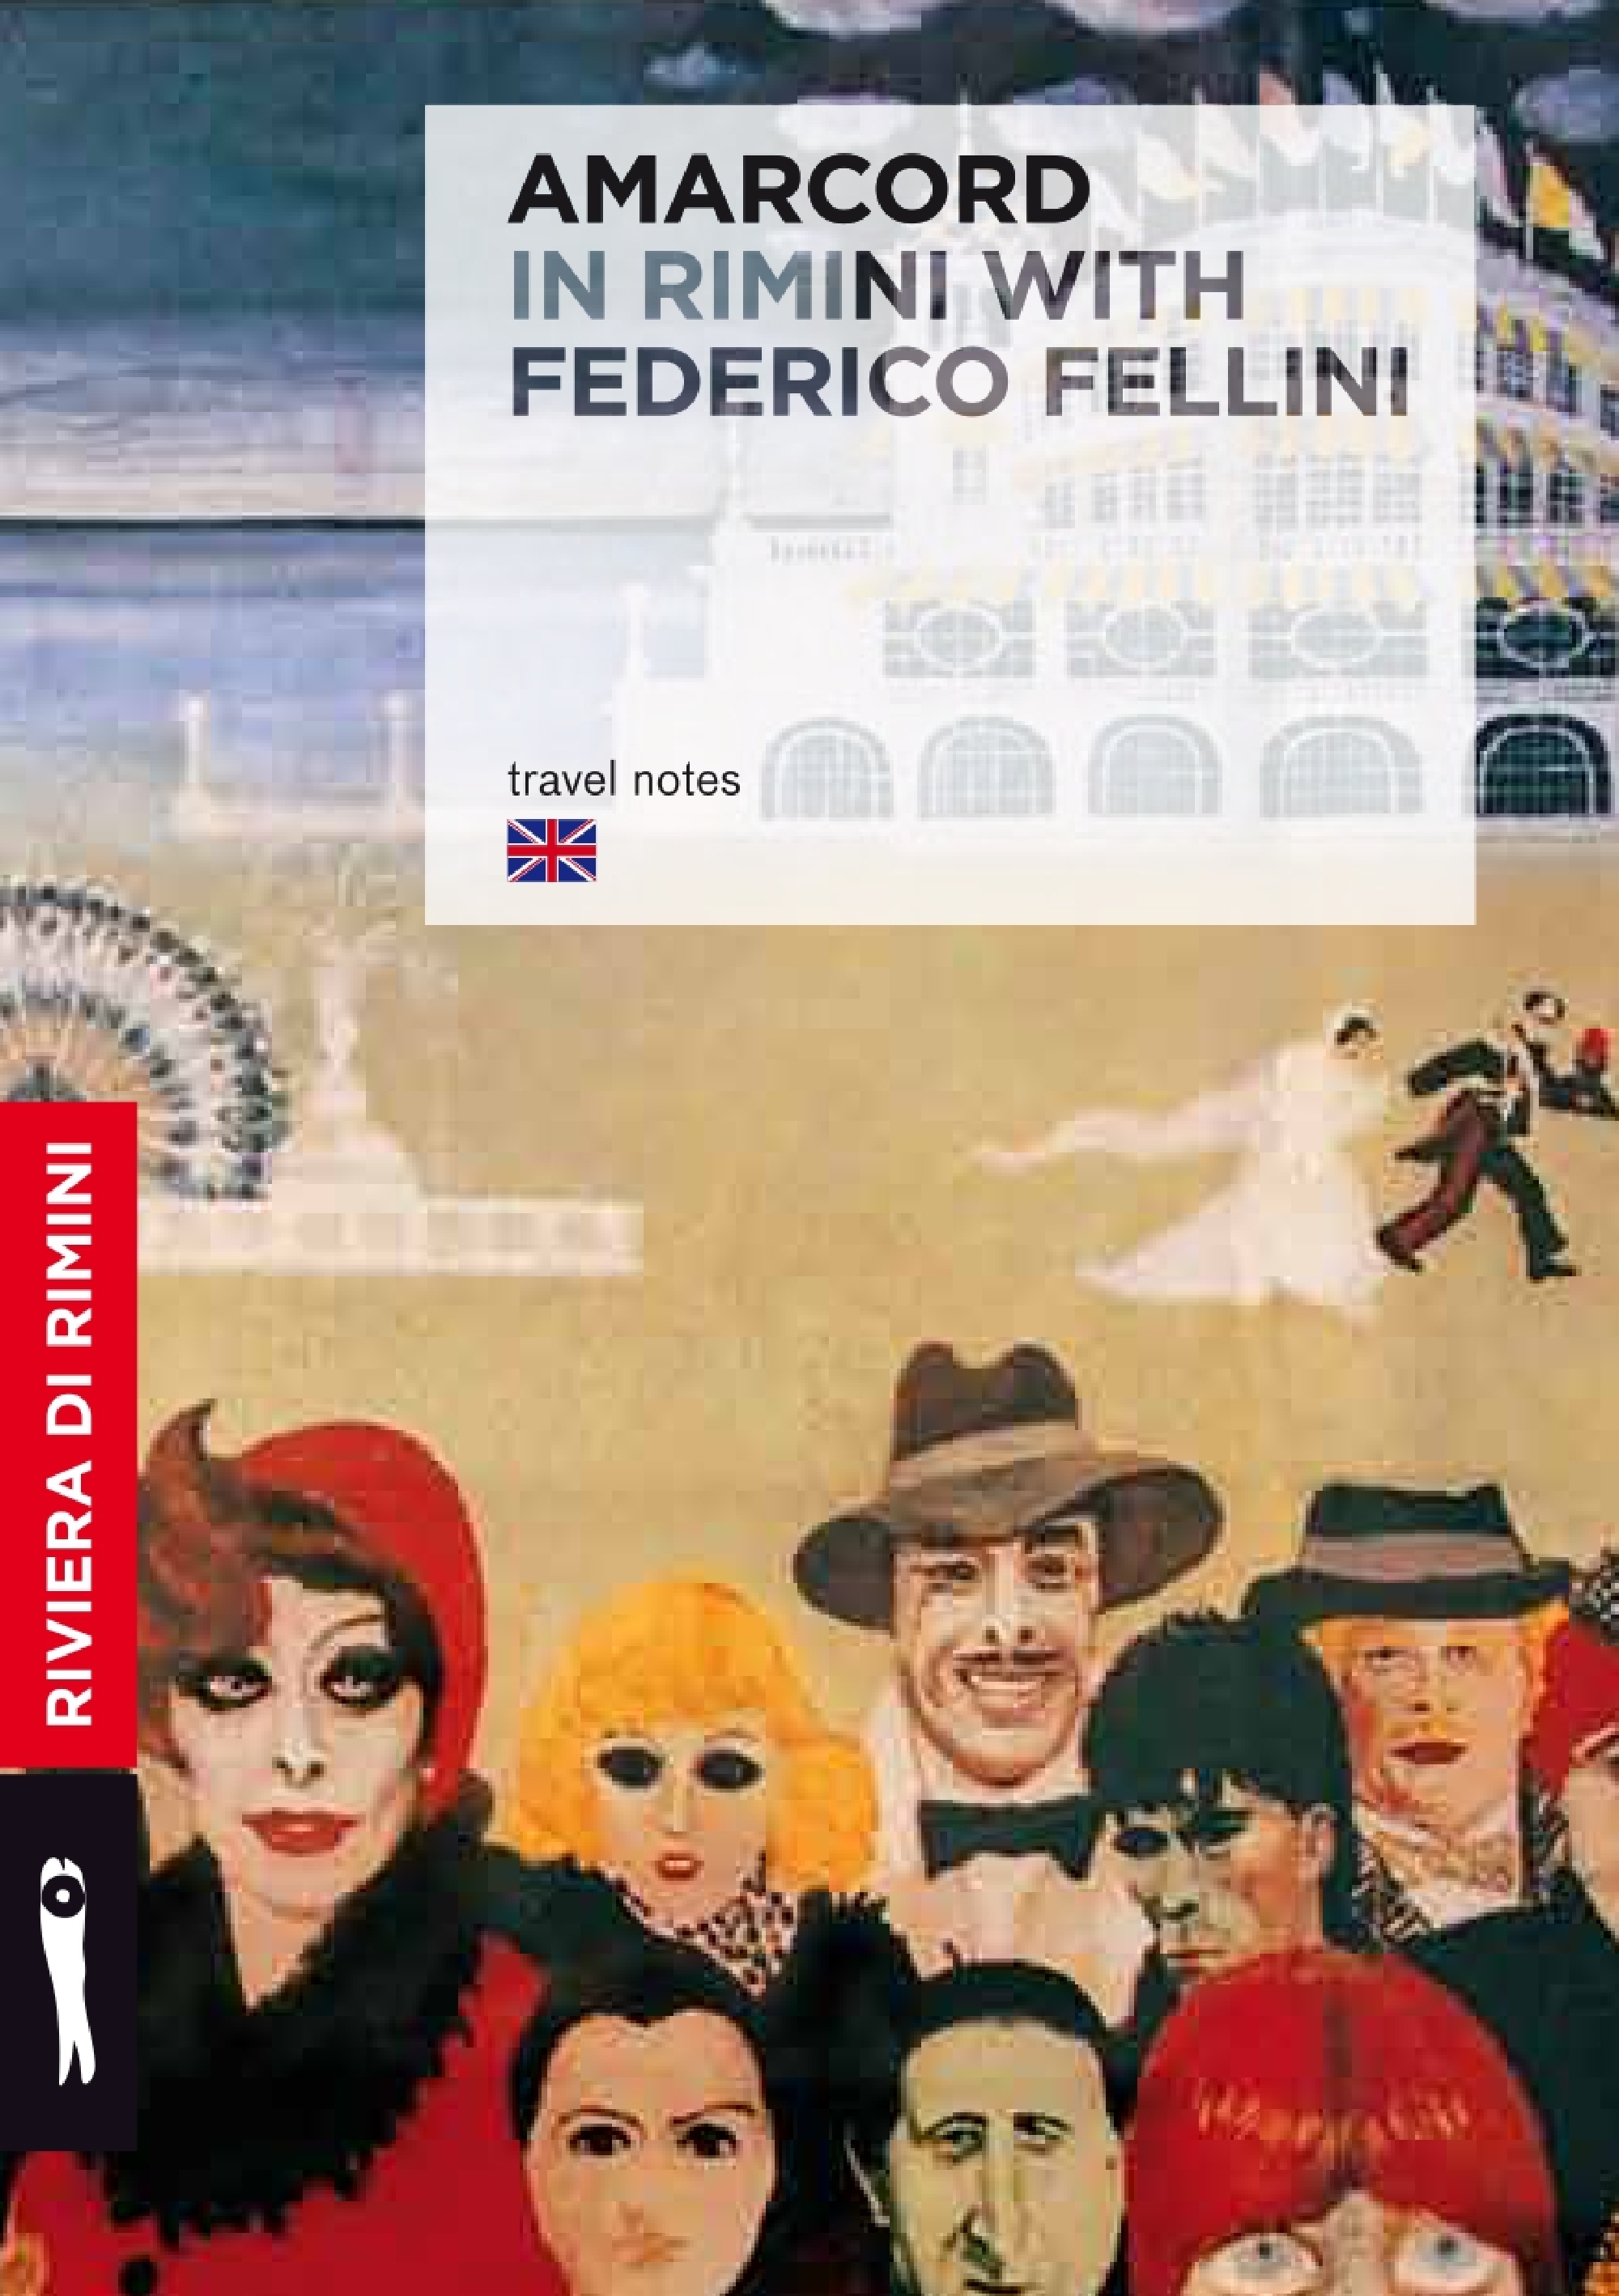 PDF: Amarcord in Rimini with Federico Fellini EN 4.35M